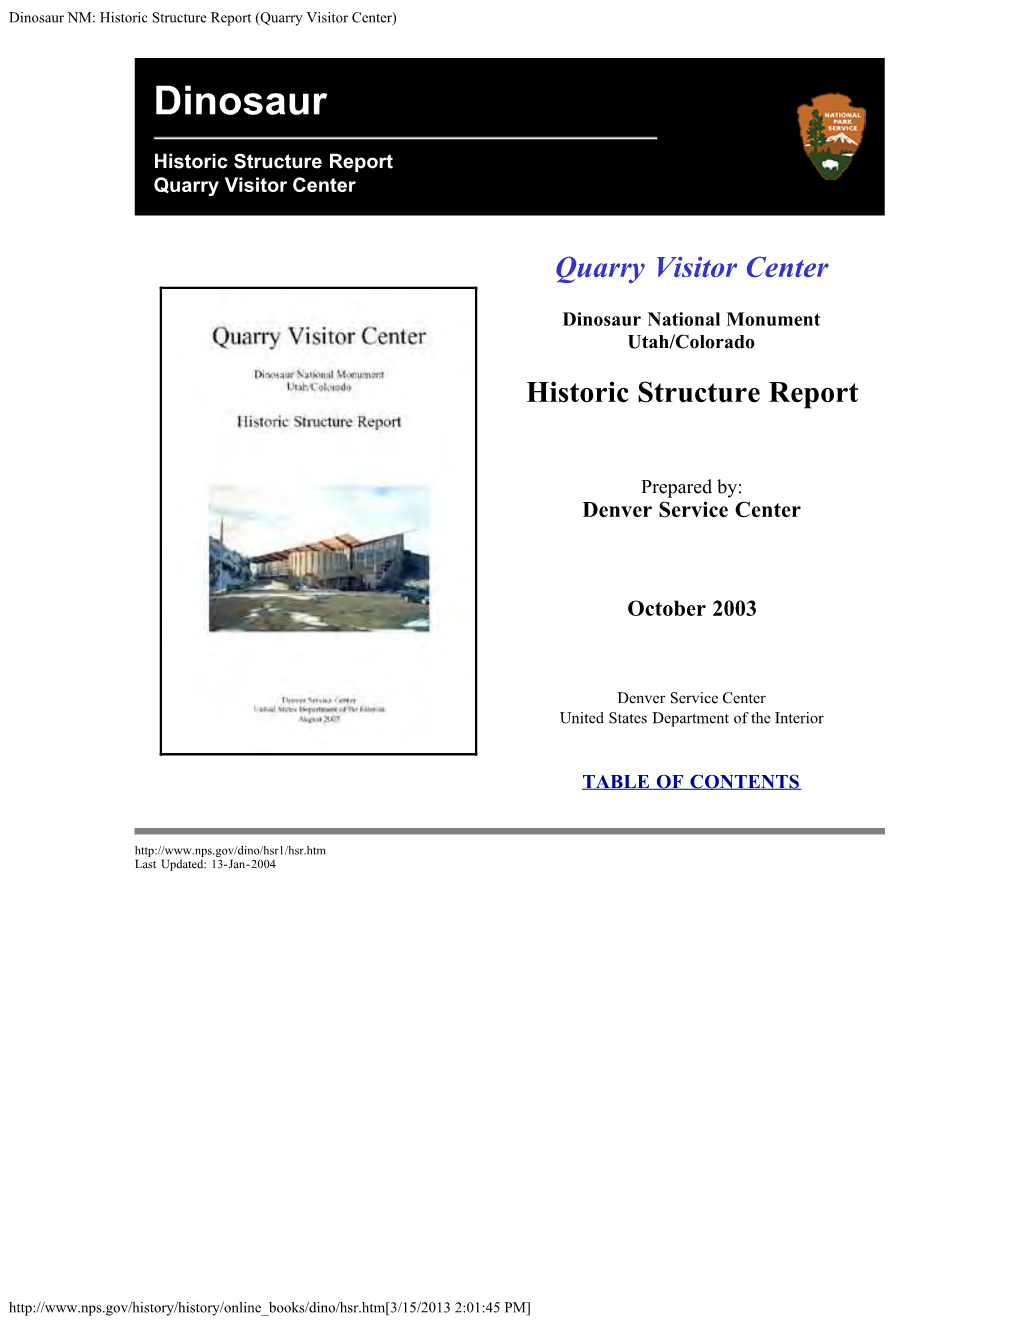 Historic Structure Report: Quarry Visitor Center